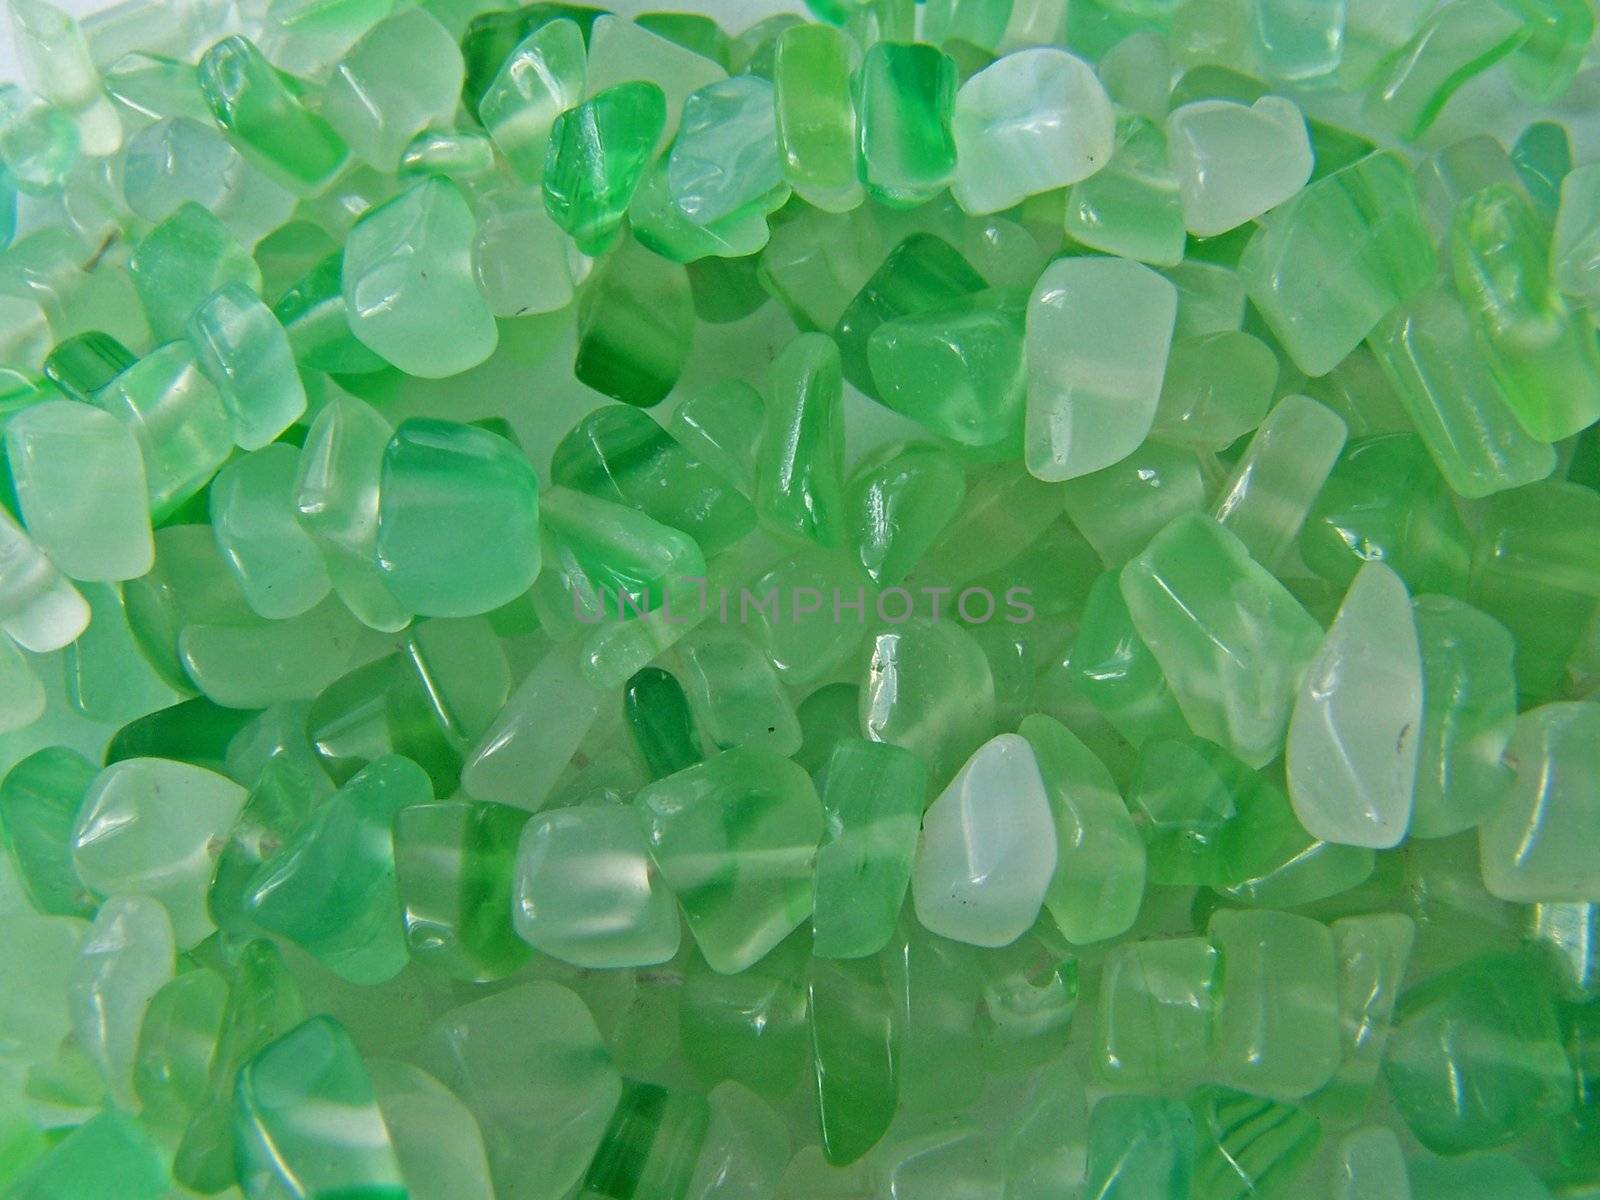 Green gemstones by Lessadar